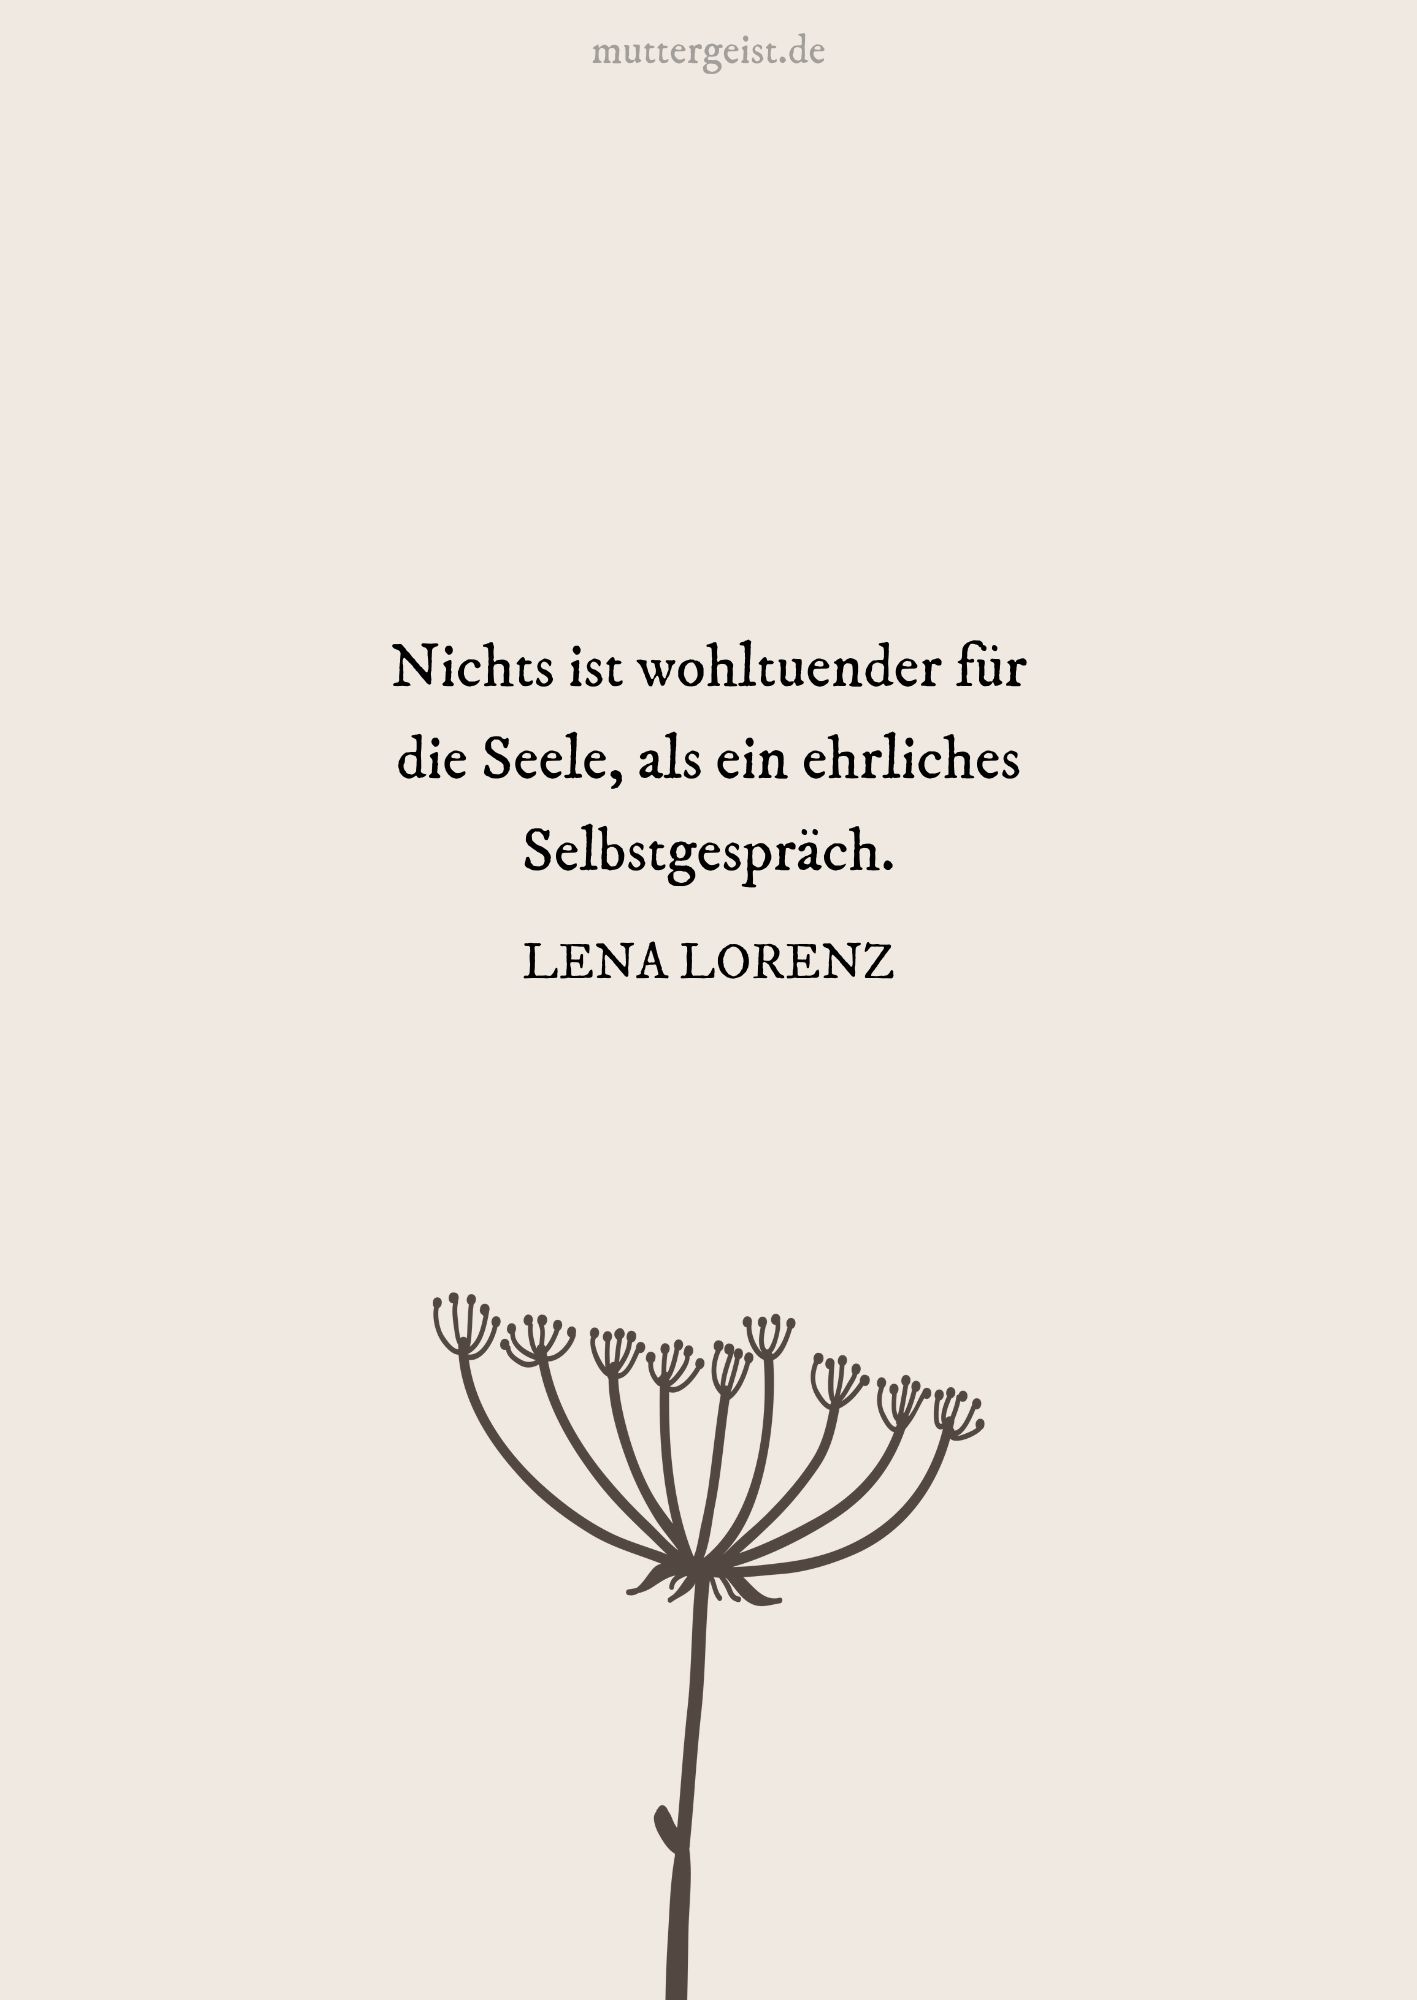 Lena Lorenz' Zitat über Seele